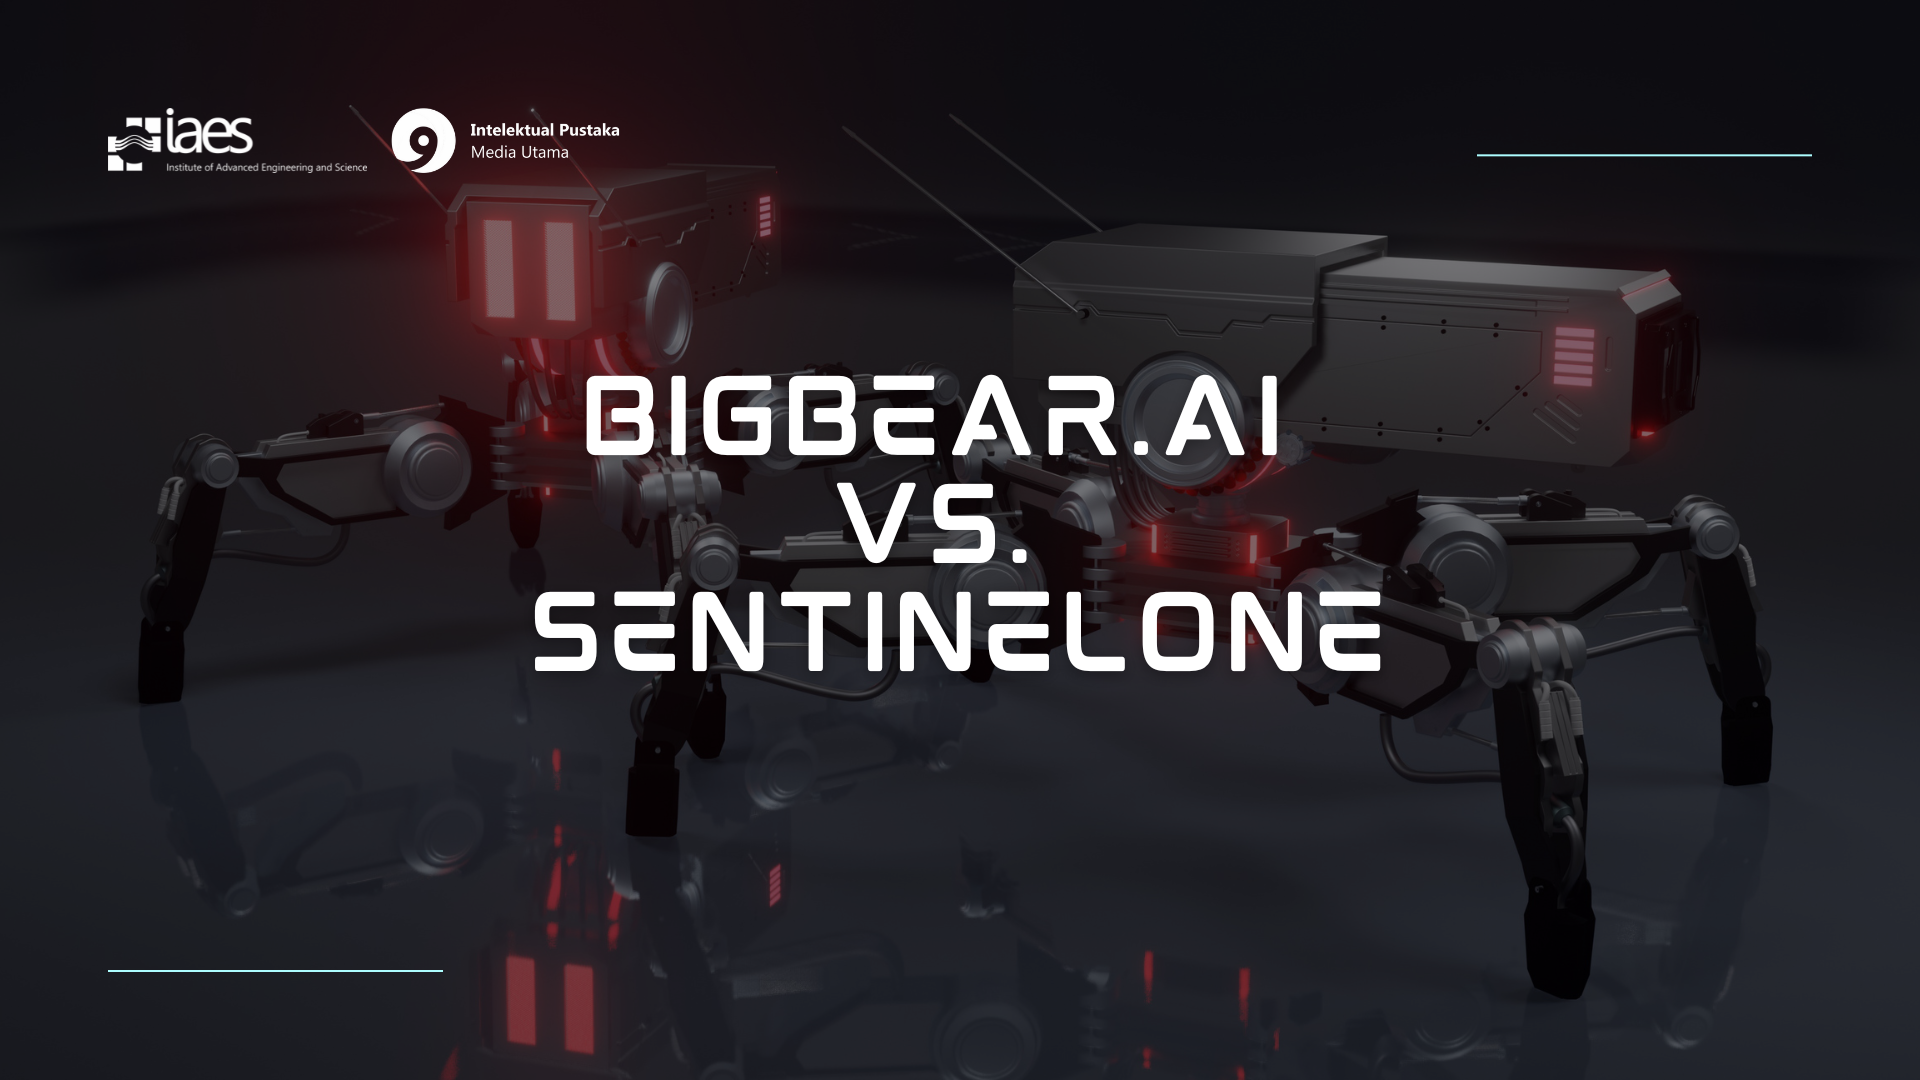 BigBear.ai vs. SentinelOne, Which is Better?